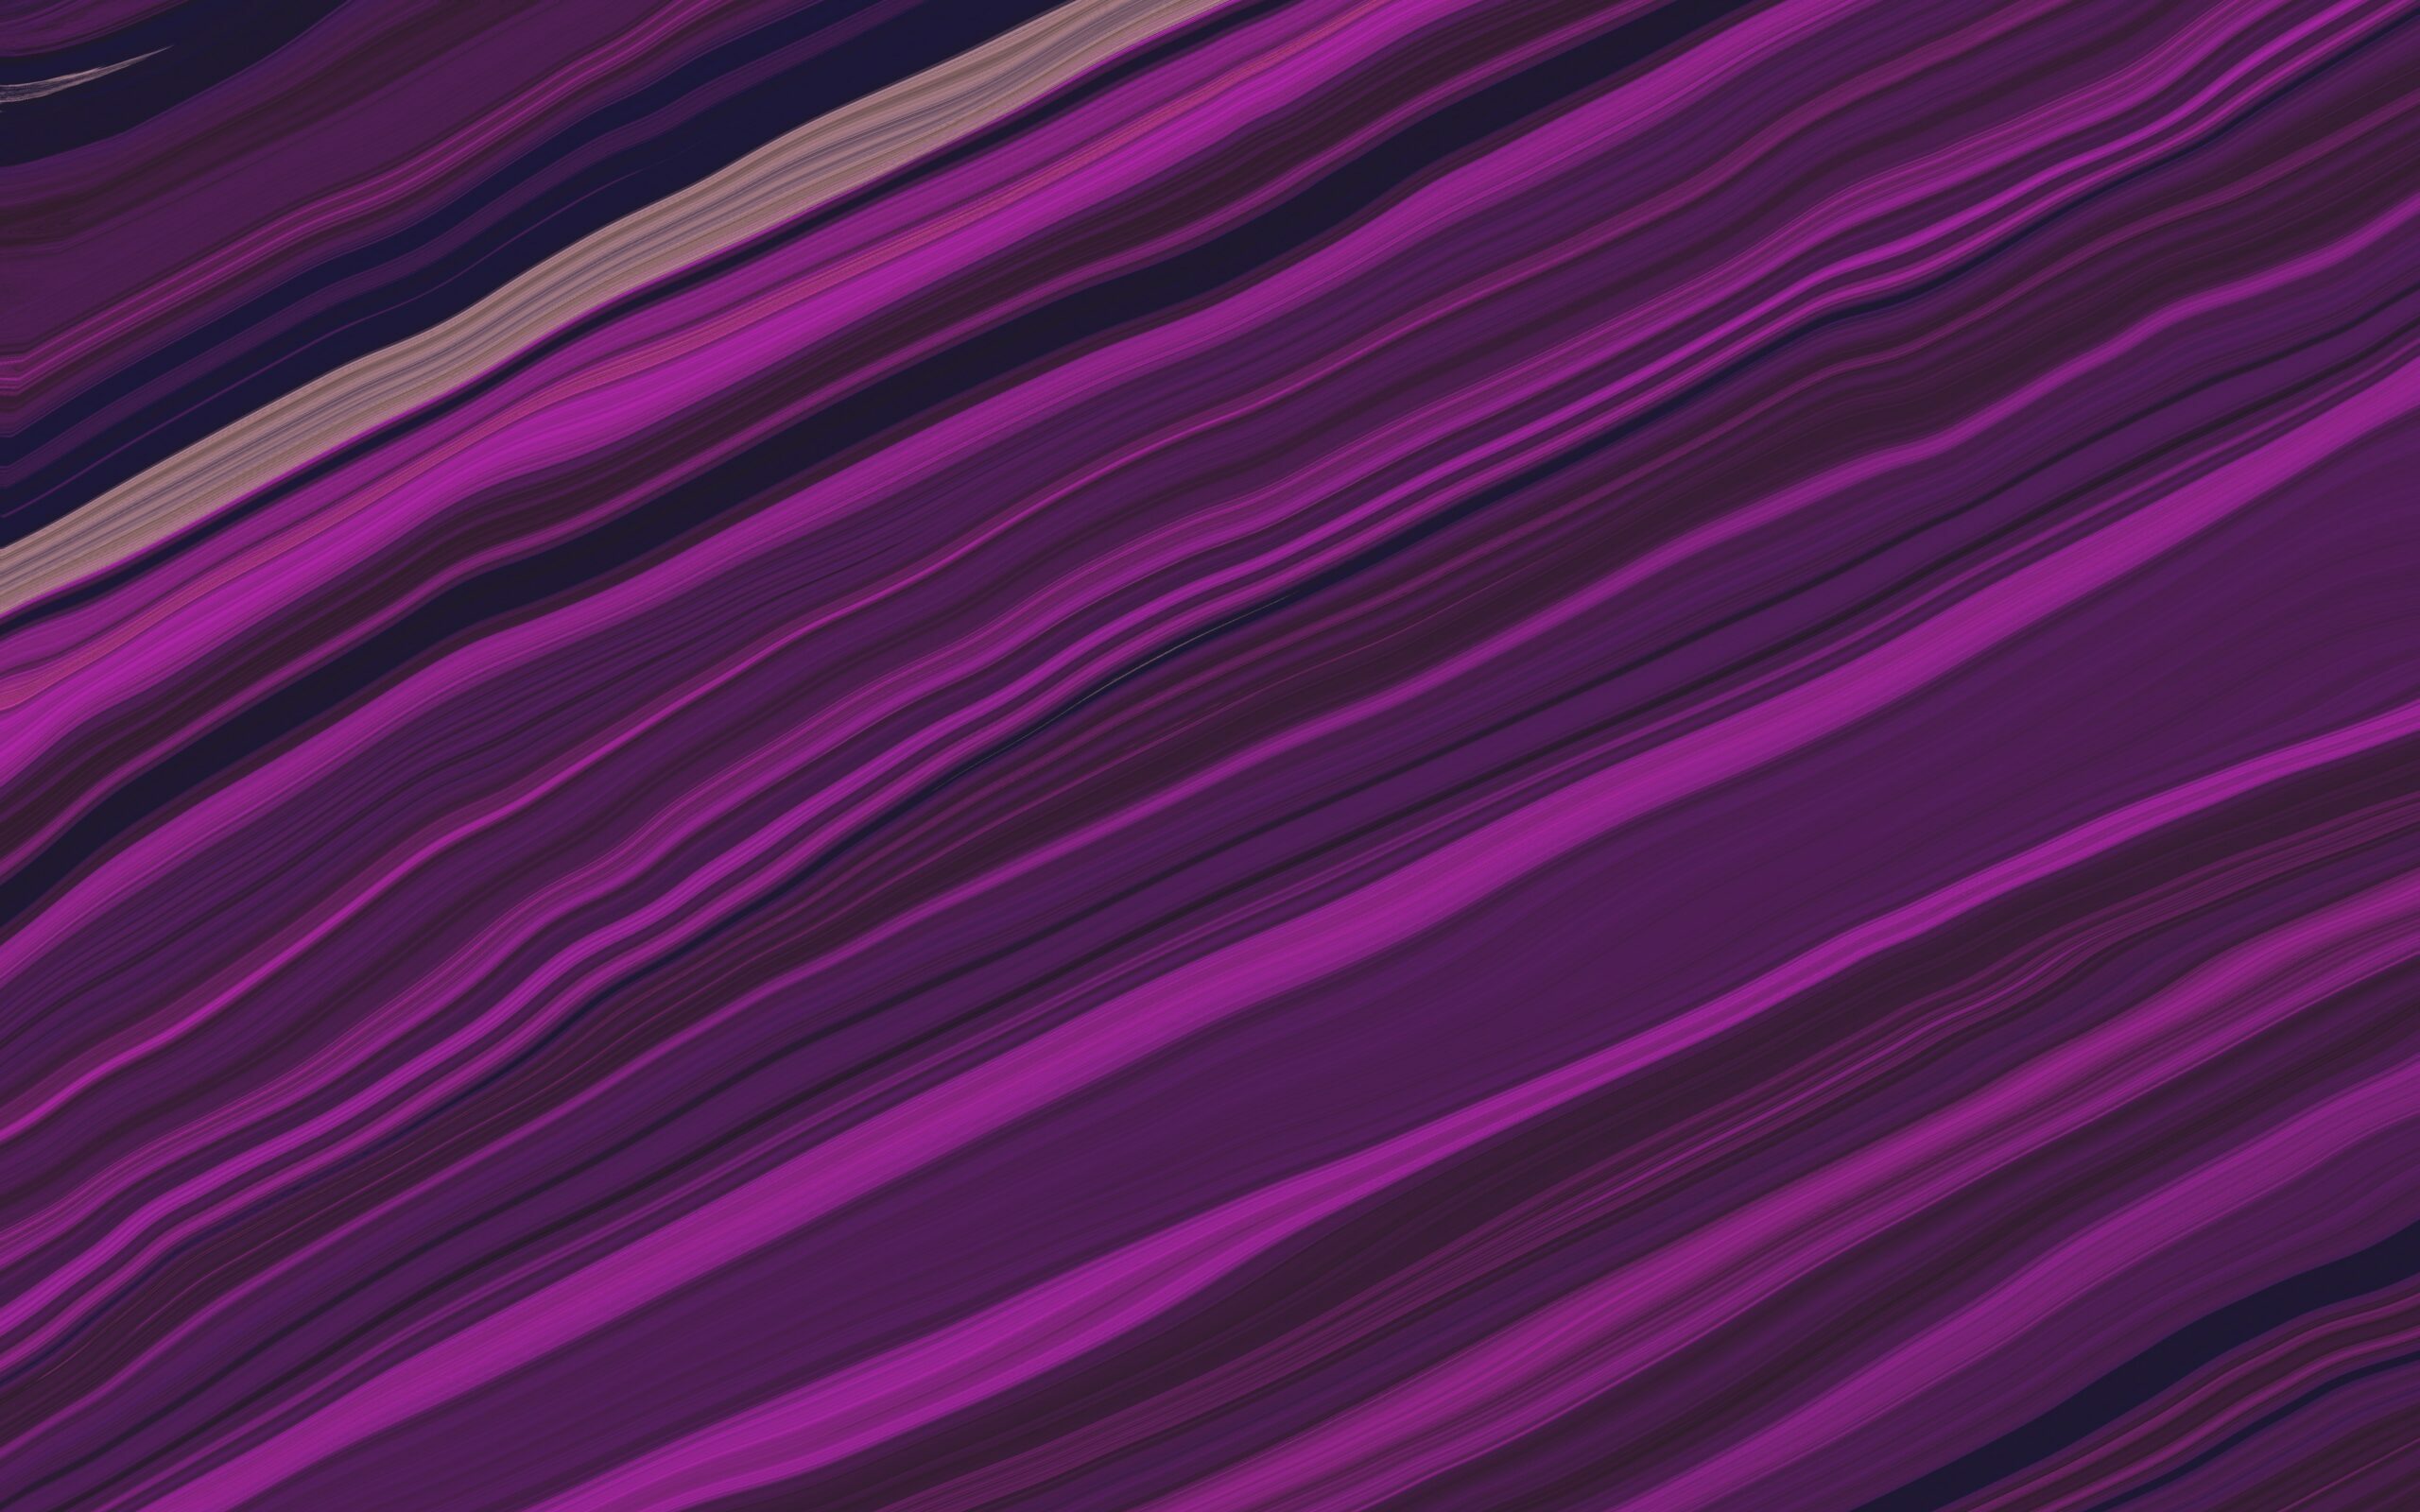 a purple ripple